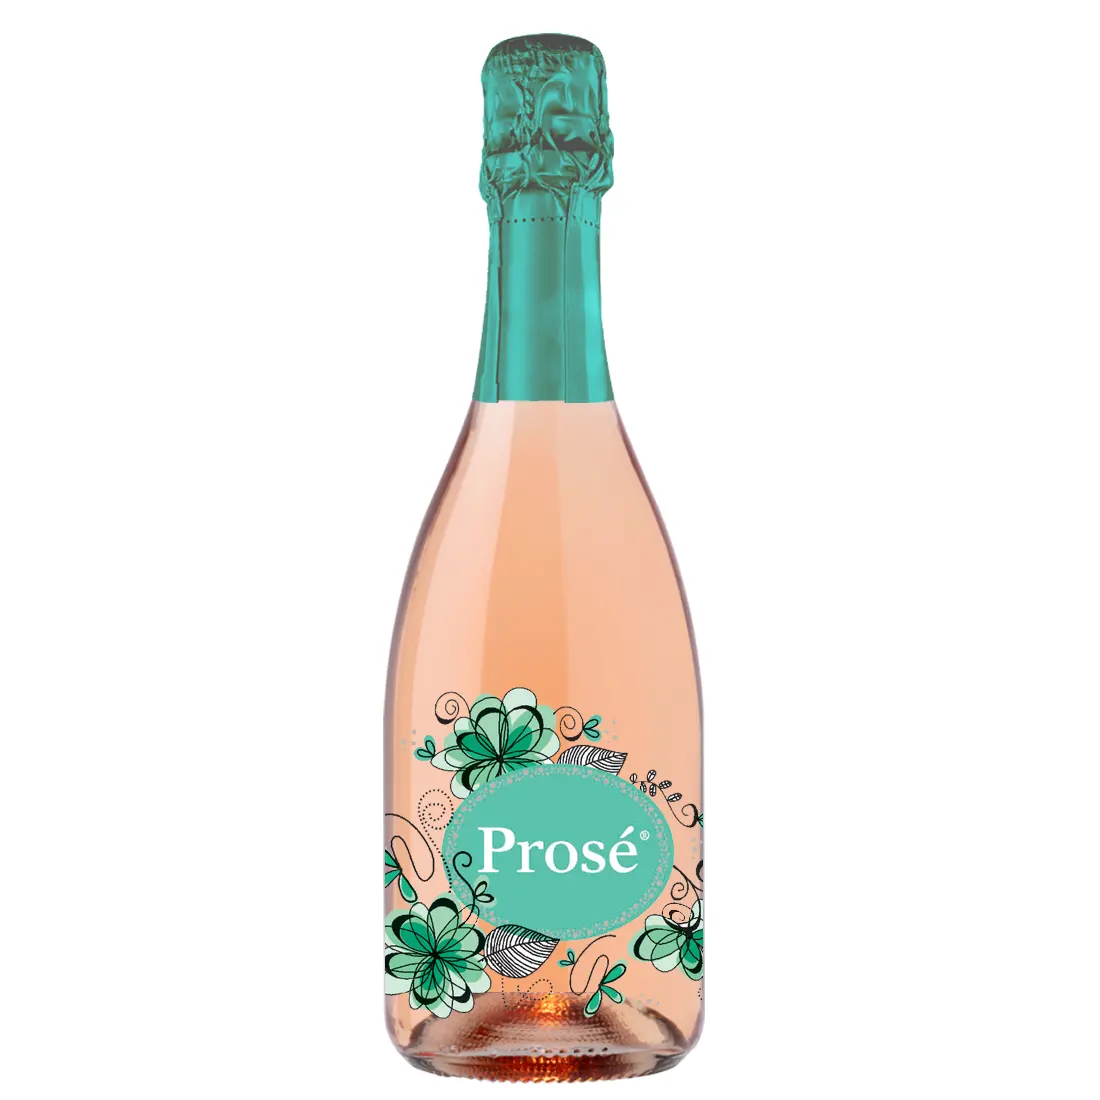 Italian high quality sparkling wine Prose Prosecco Rose Spumante horeca italy 75 cl bottle alcoholic beverage